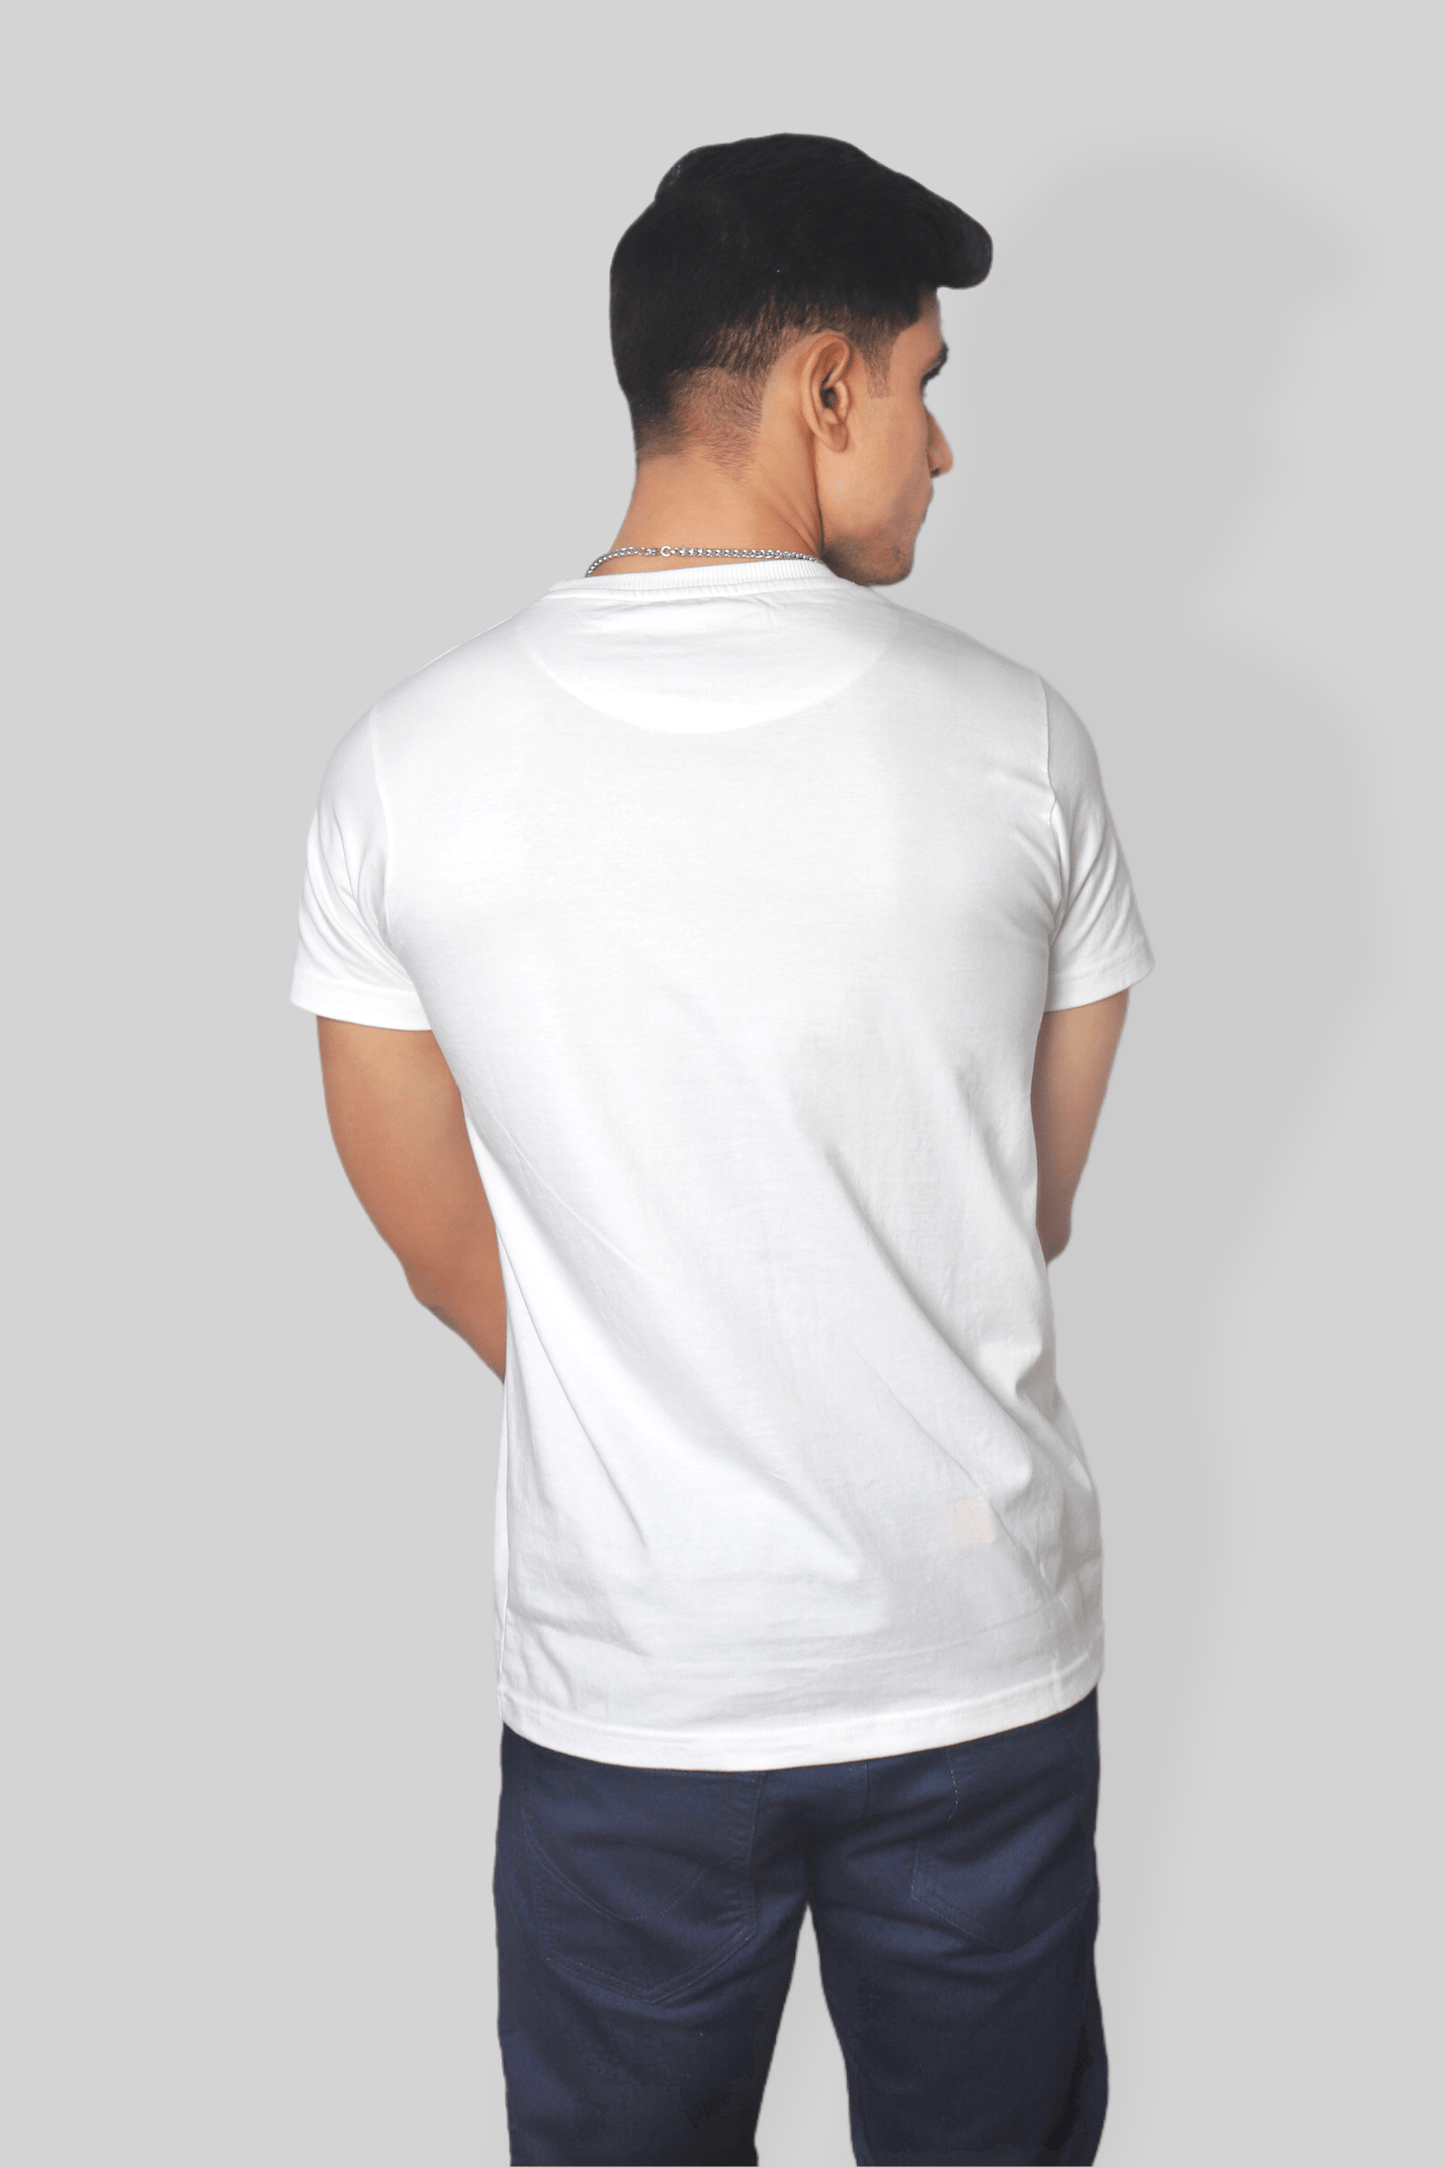 Solid White plain Round Neck Cotton Tshirt for men